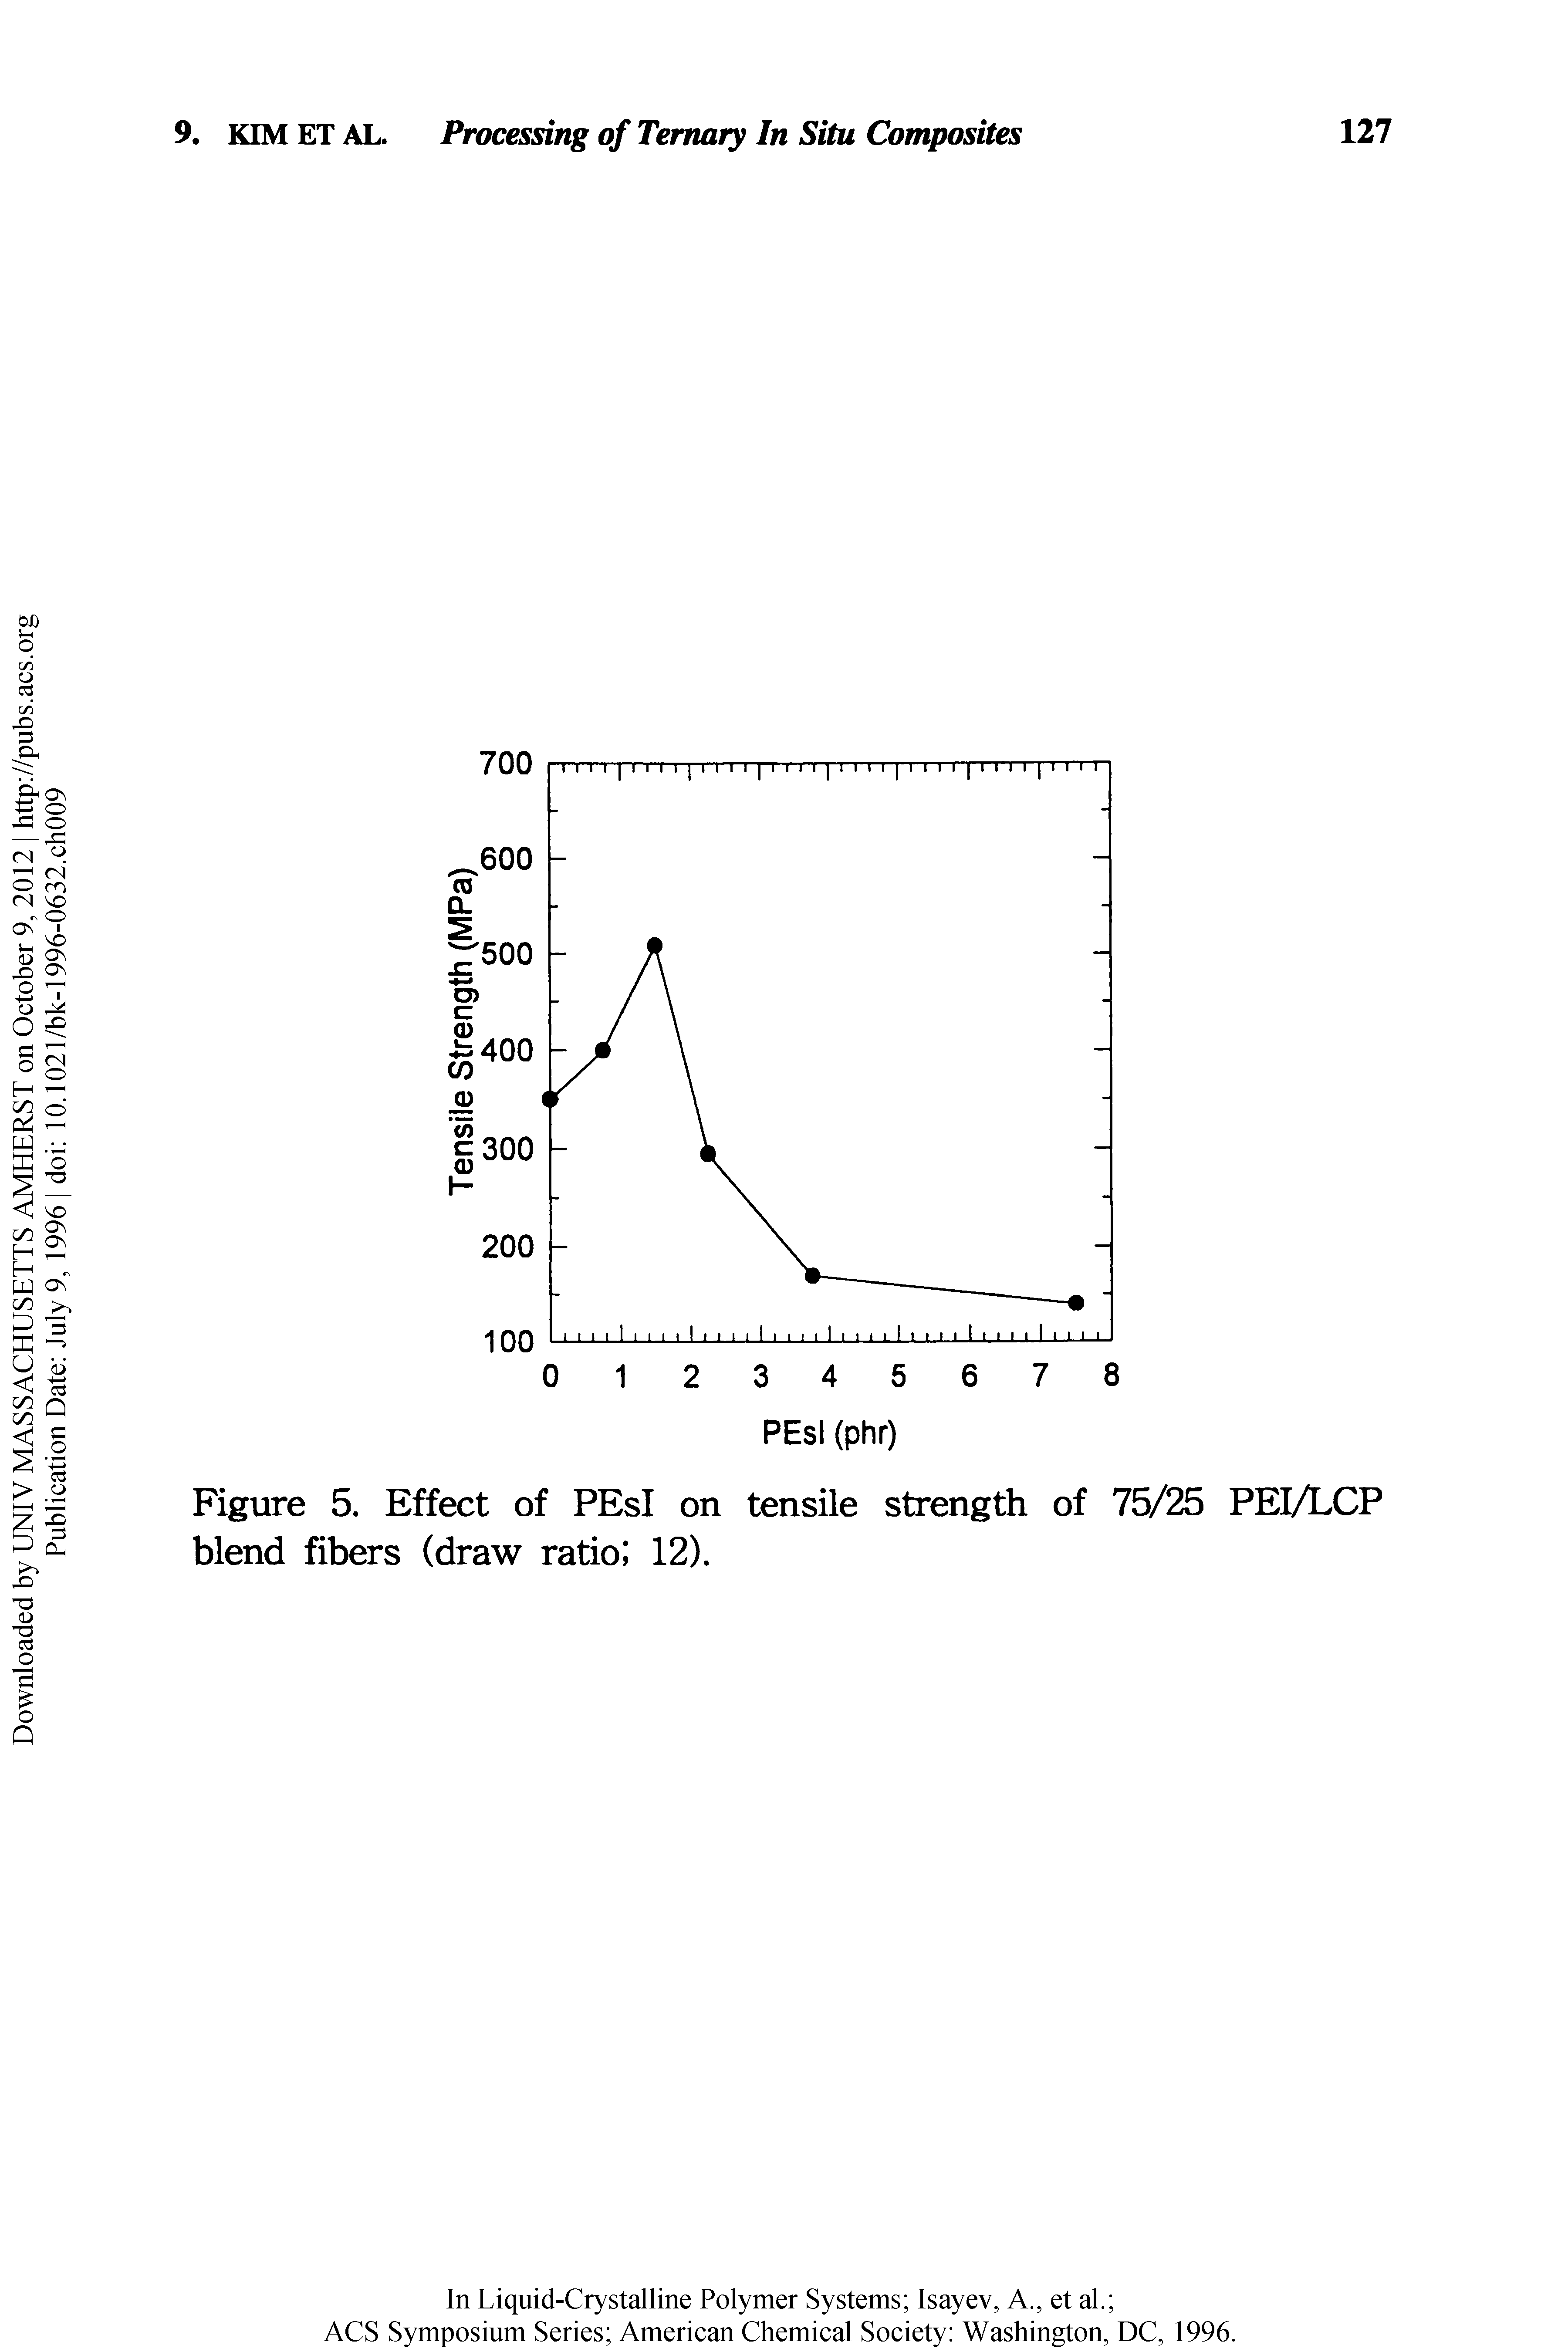 Figure 5. Effect of PEsI on tensile strength of 75/25 PEI/LCP blend fibers (draw ratio 12).